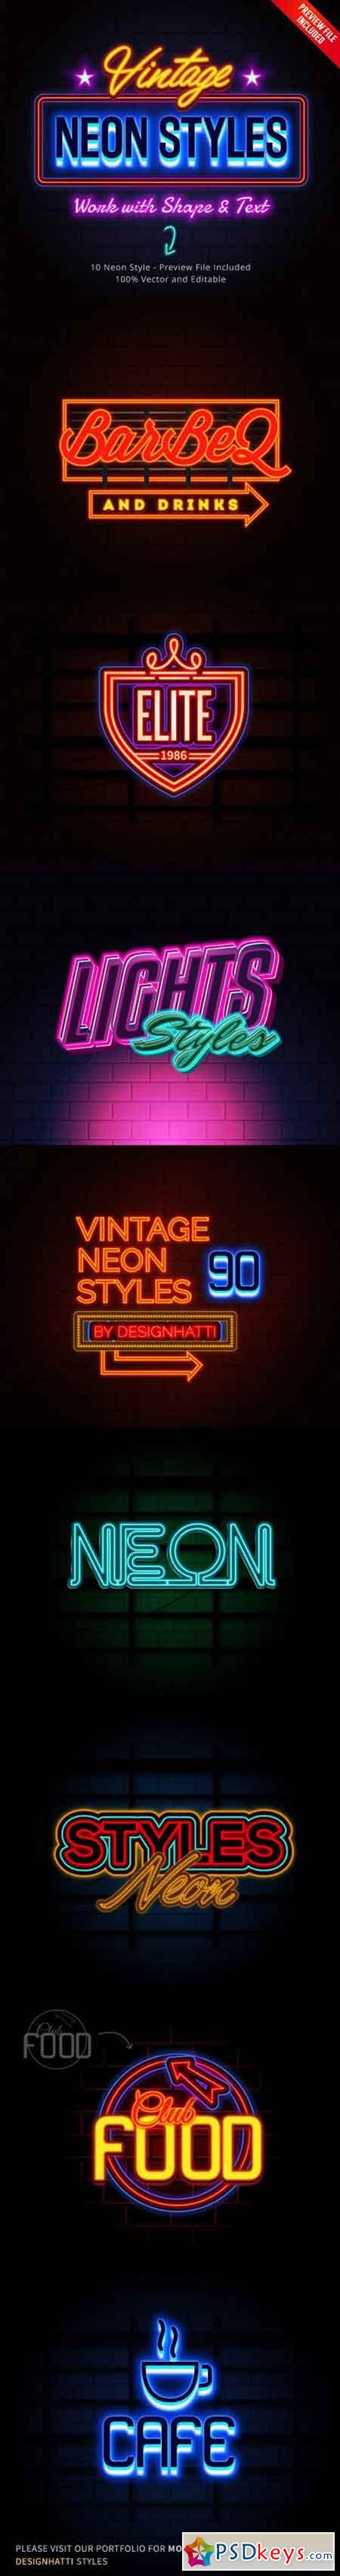 Vintage Neon Styles 19378940